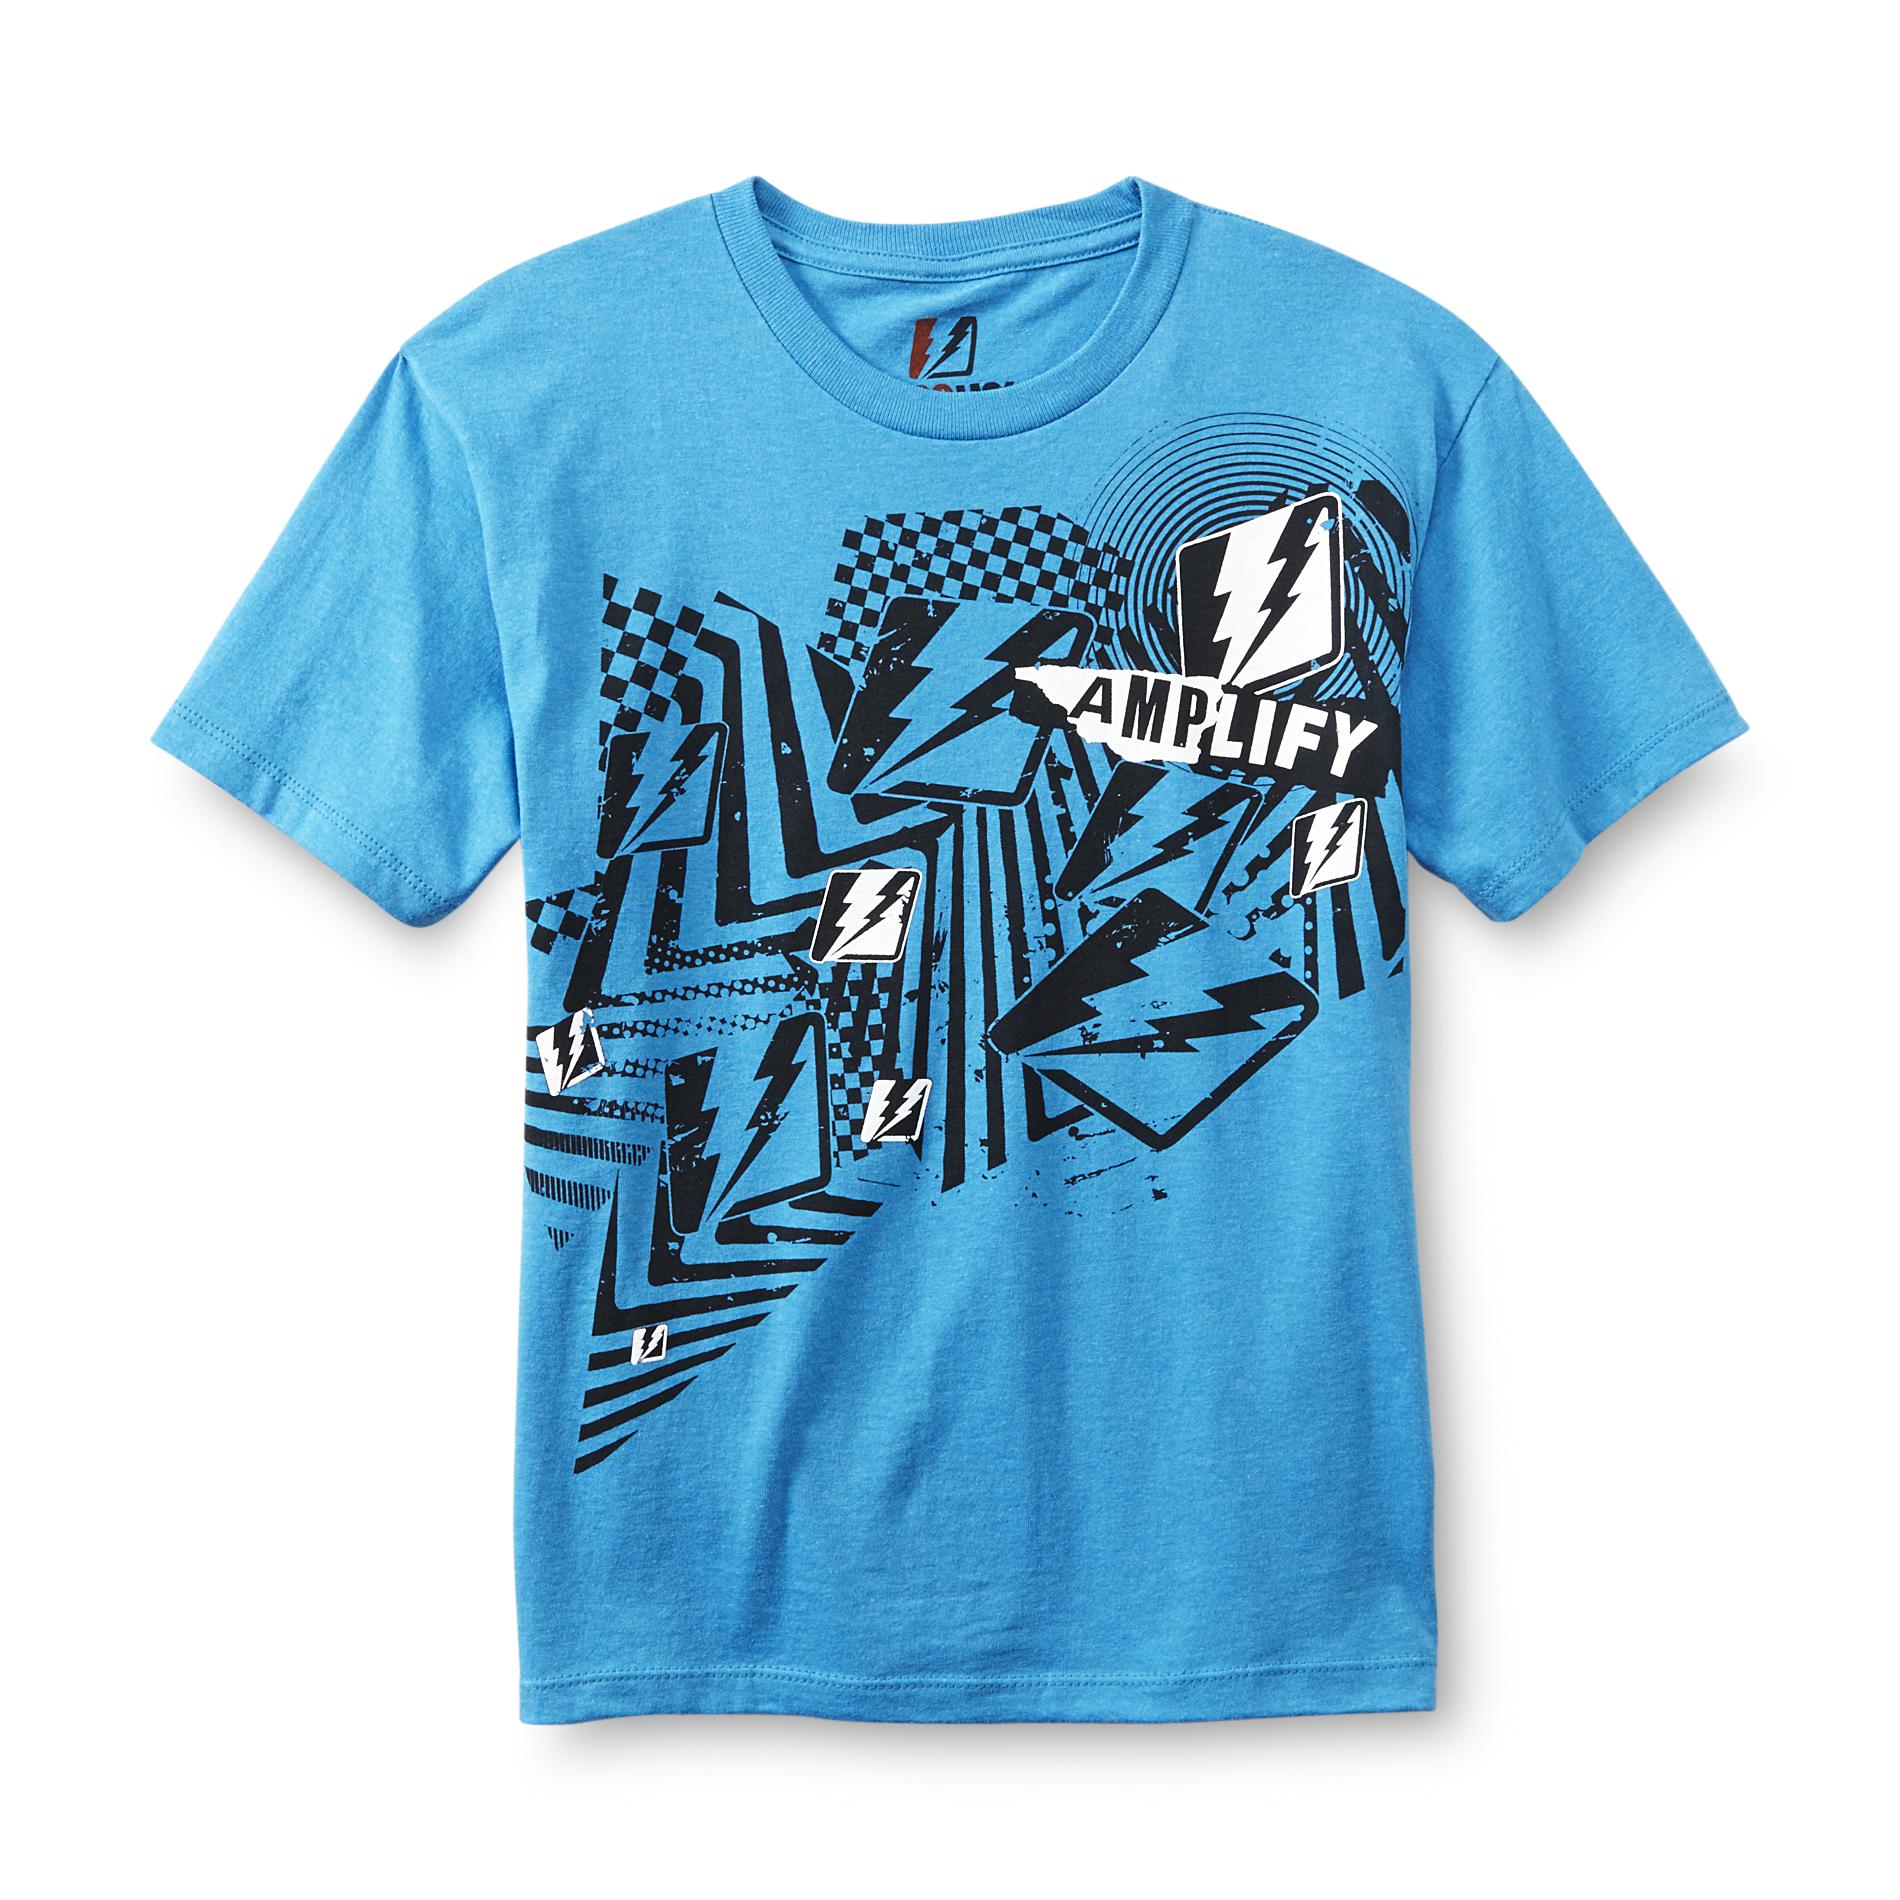 Amplify Boy's Graphic T-Shirt - Lightning Logos